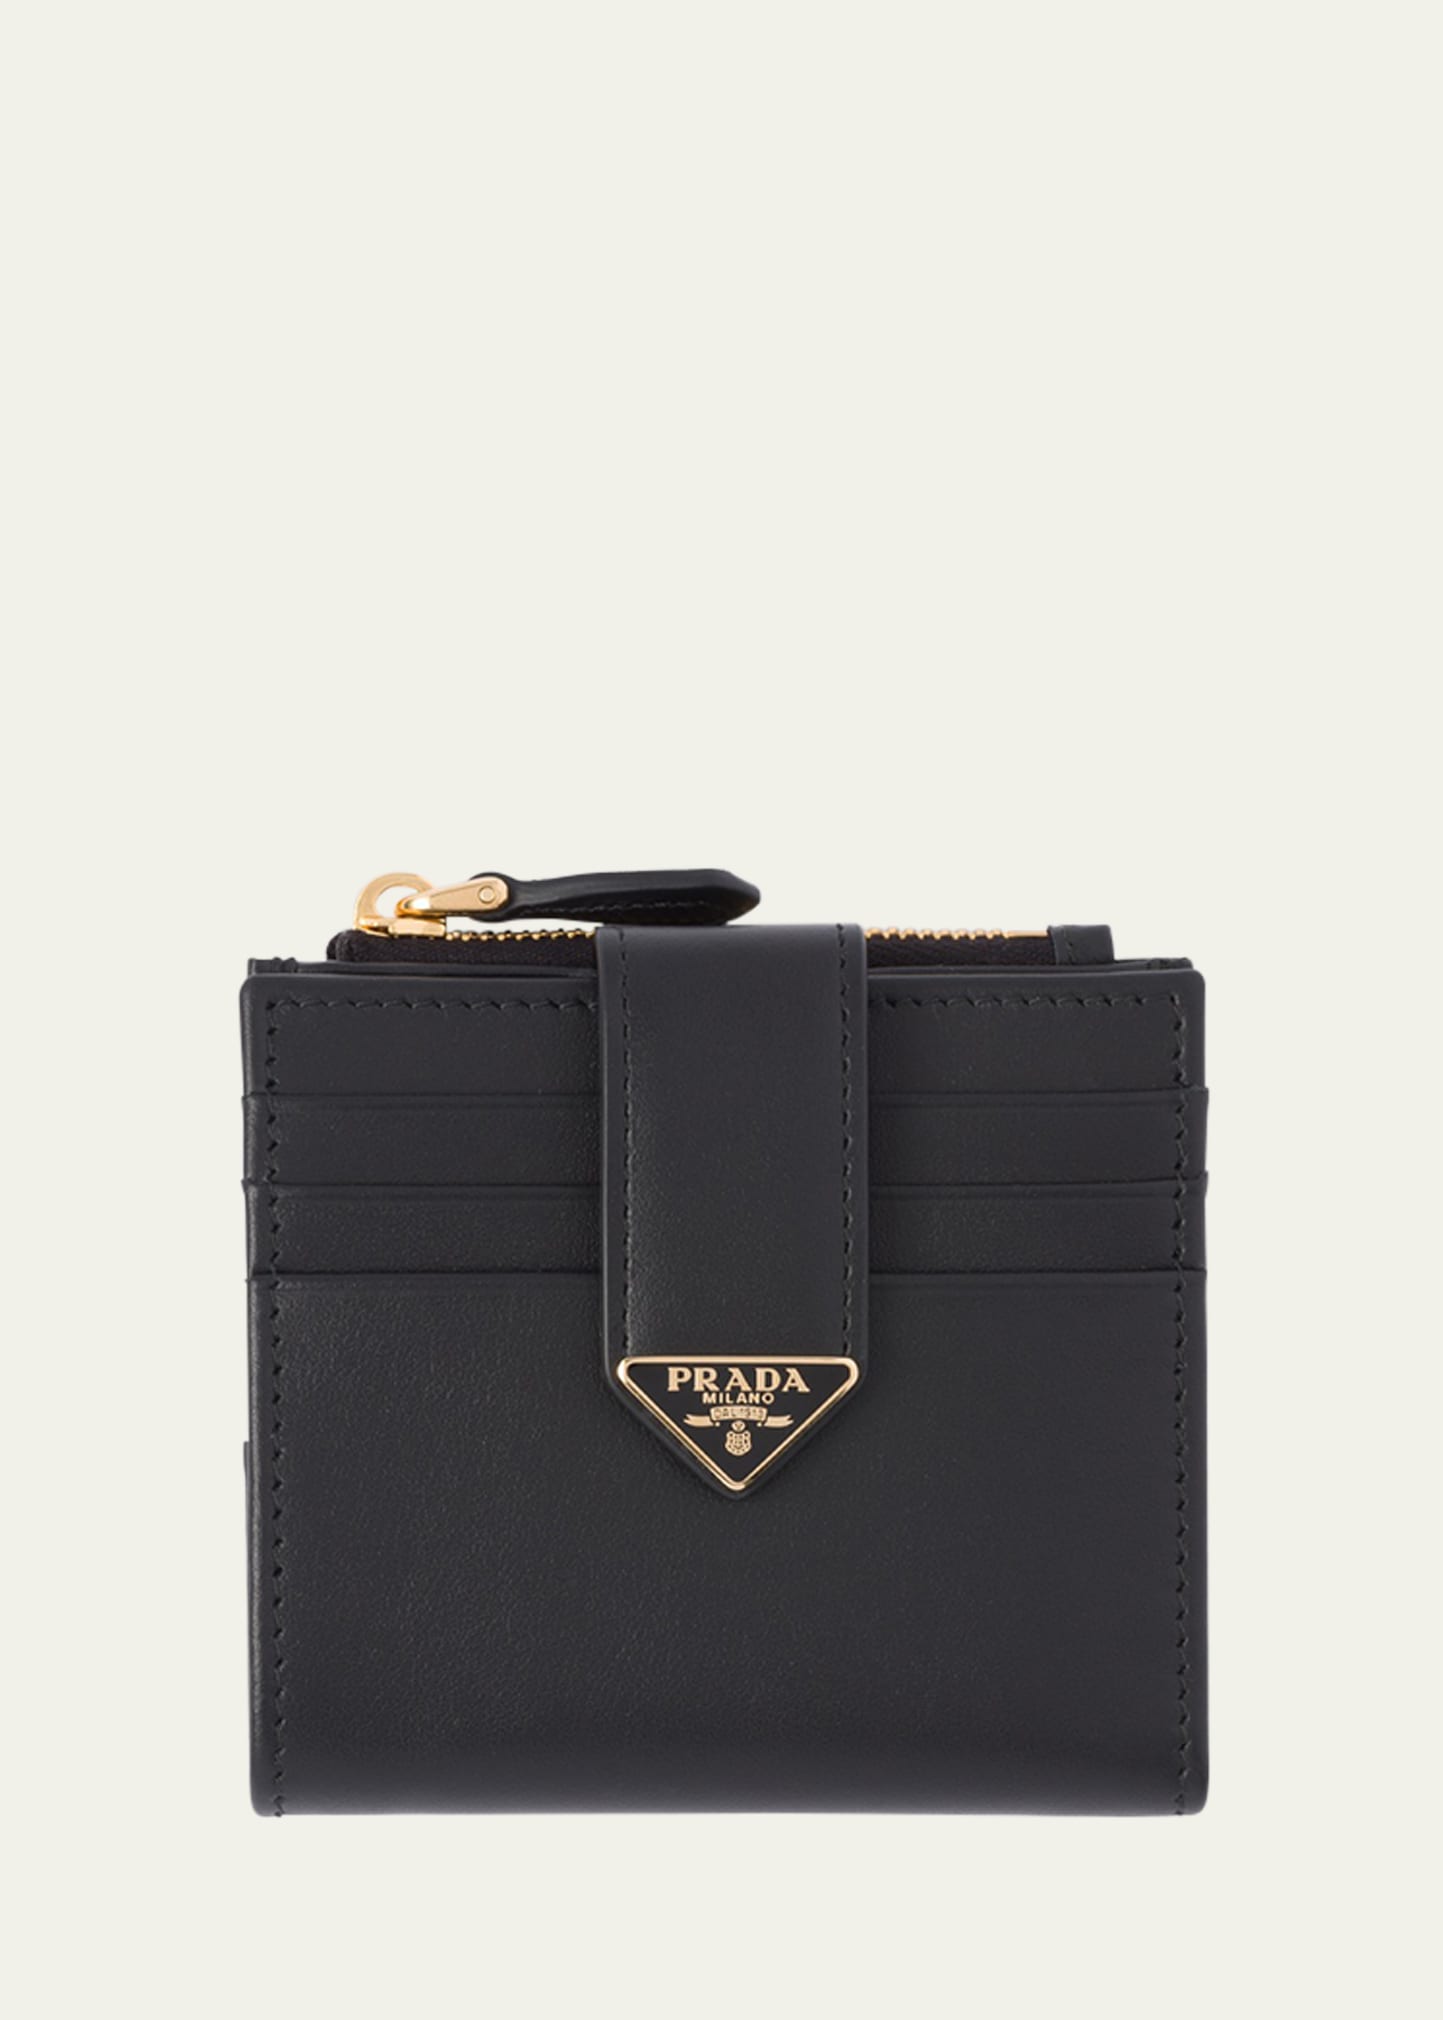 Prada City Calf Leather Compact Wallet In F0002 Nero